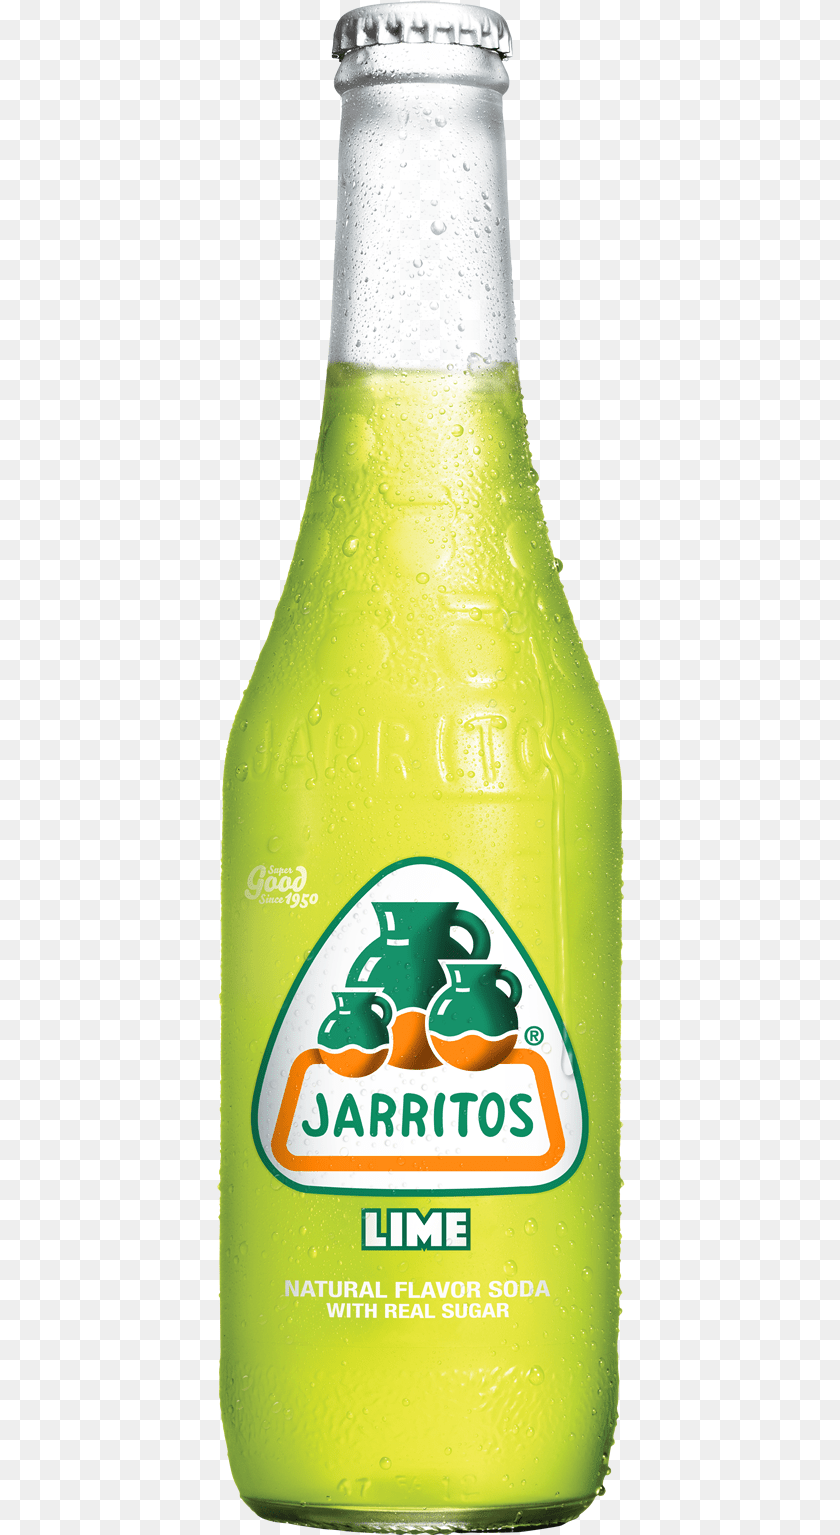 409x1535 Drinknon Alcoholic Juicesoft Beveragesour Mixcarbonated Jarritos Lime, Bottle, Beverage, Pop Bottle, Soda Transparent PNG